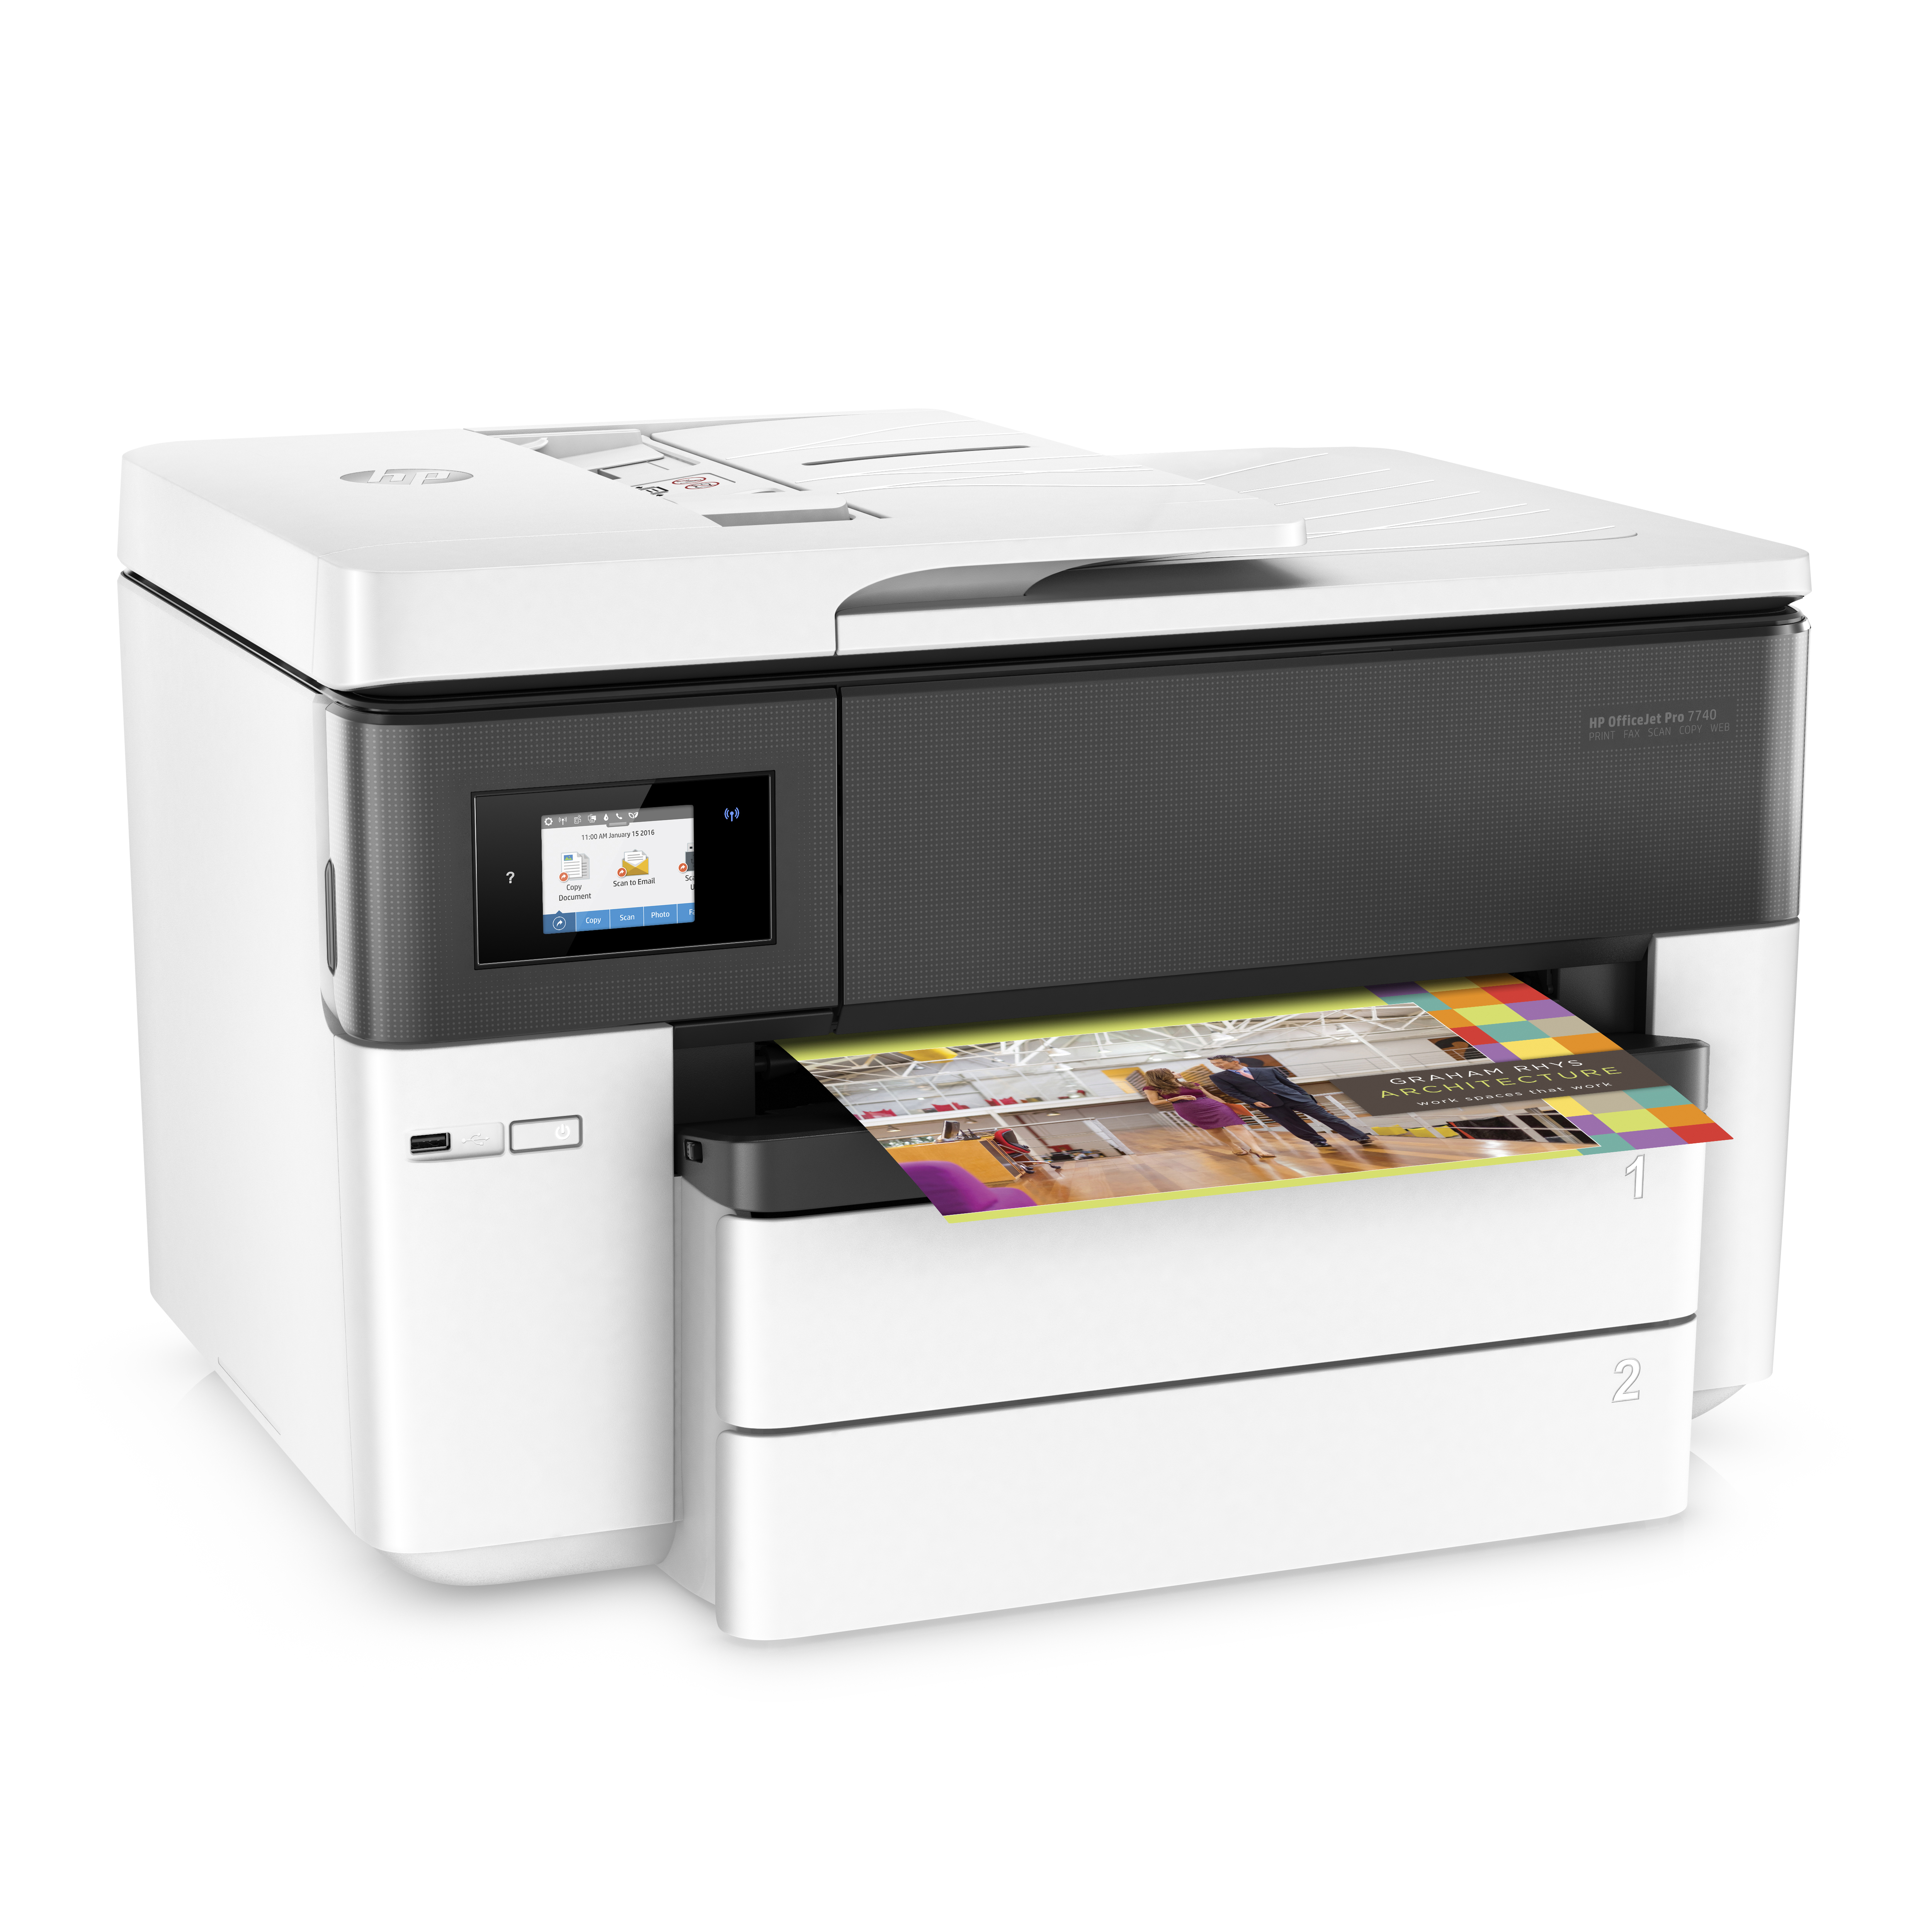 Tintenstrahldruck Großformat-Multifunktionsdrucker HP 4-in-1 WLAN Pro HP Netzwerkfähig 7740 OfficeJet